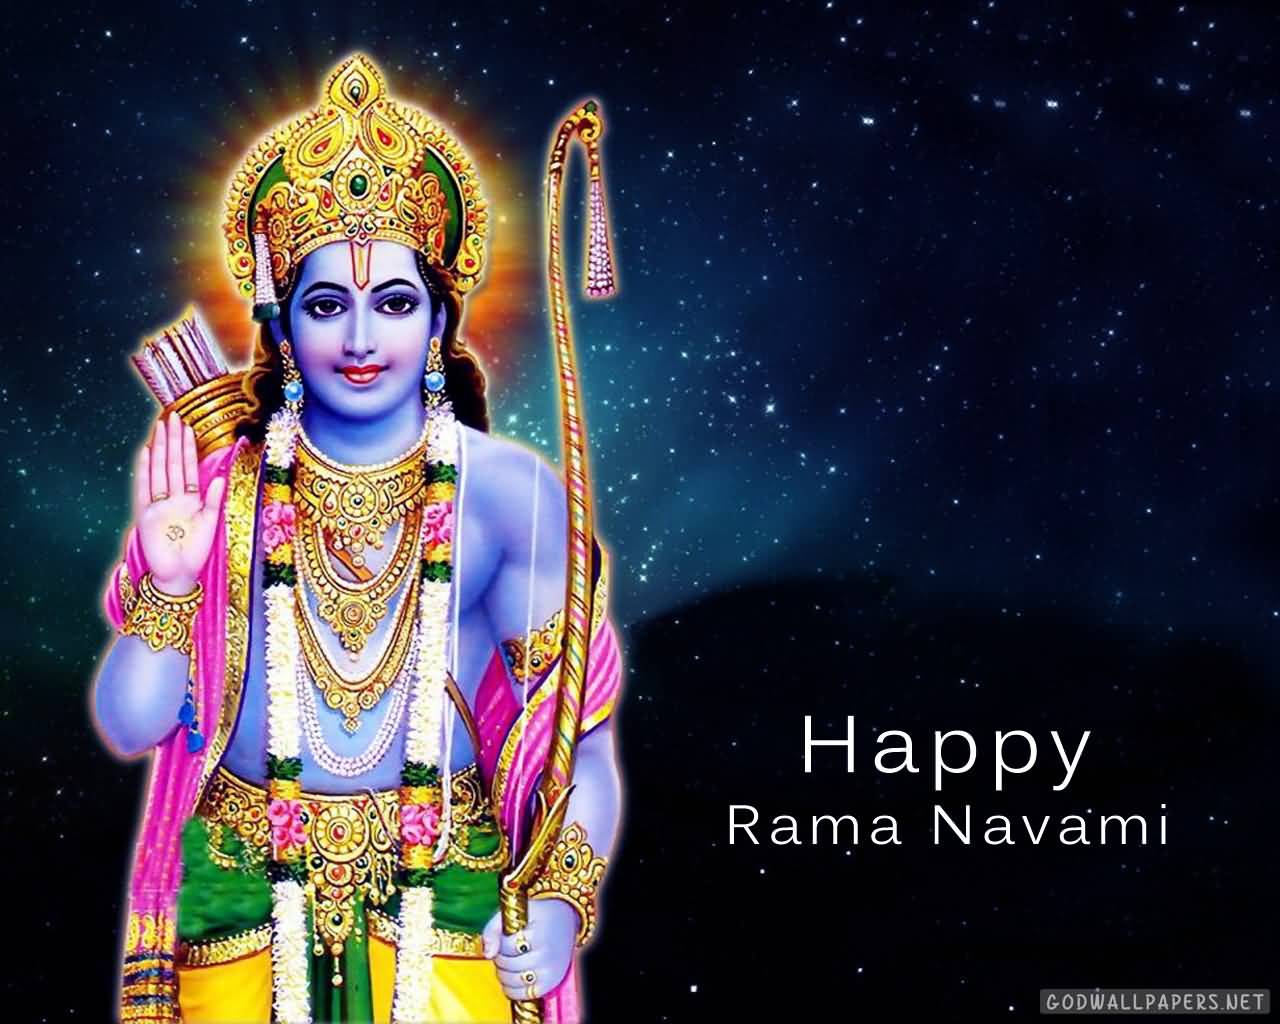 Happy Ram Navami 2017 Image